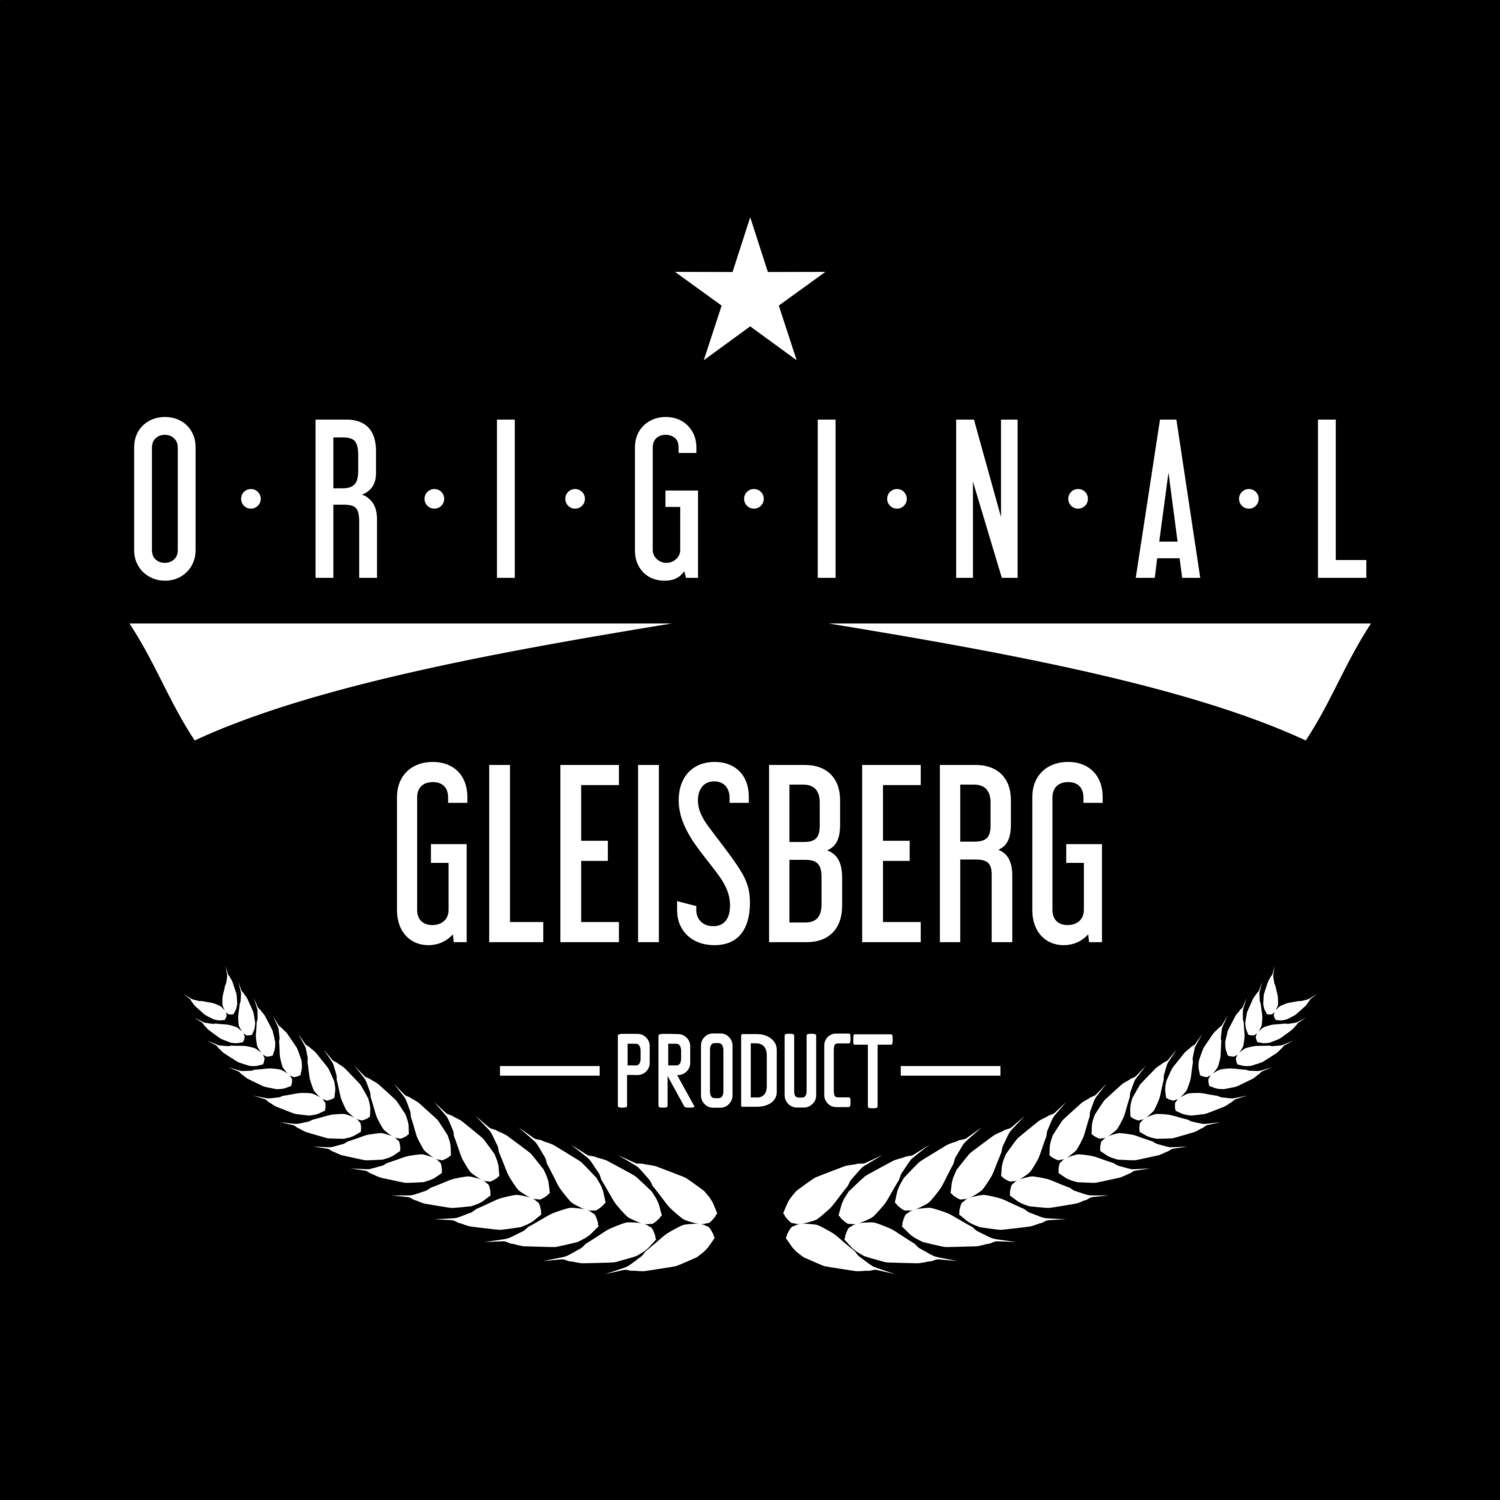 Gleisberg T-Shirt »Original Product«